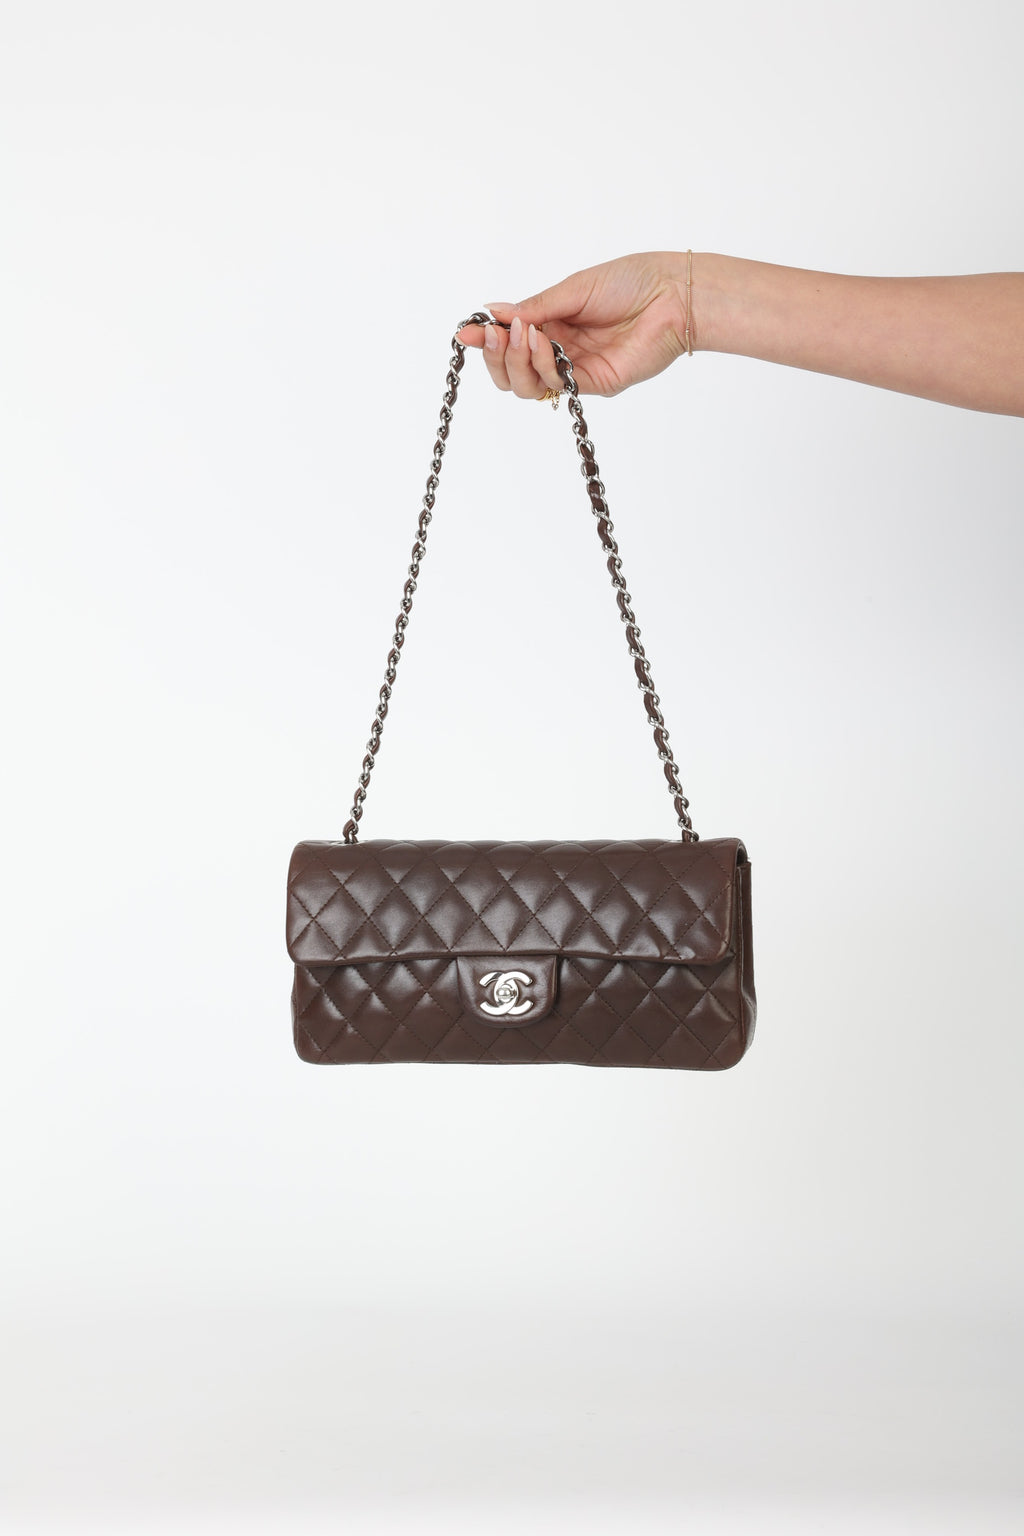 Chanel Rare Mini Classic Patent Flap Bag